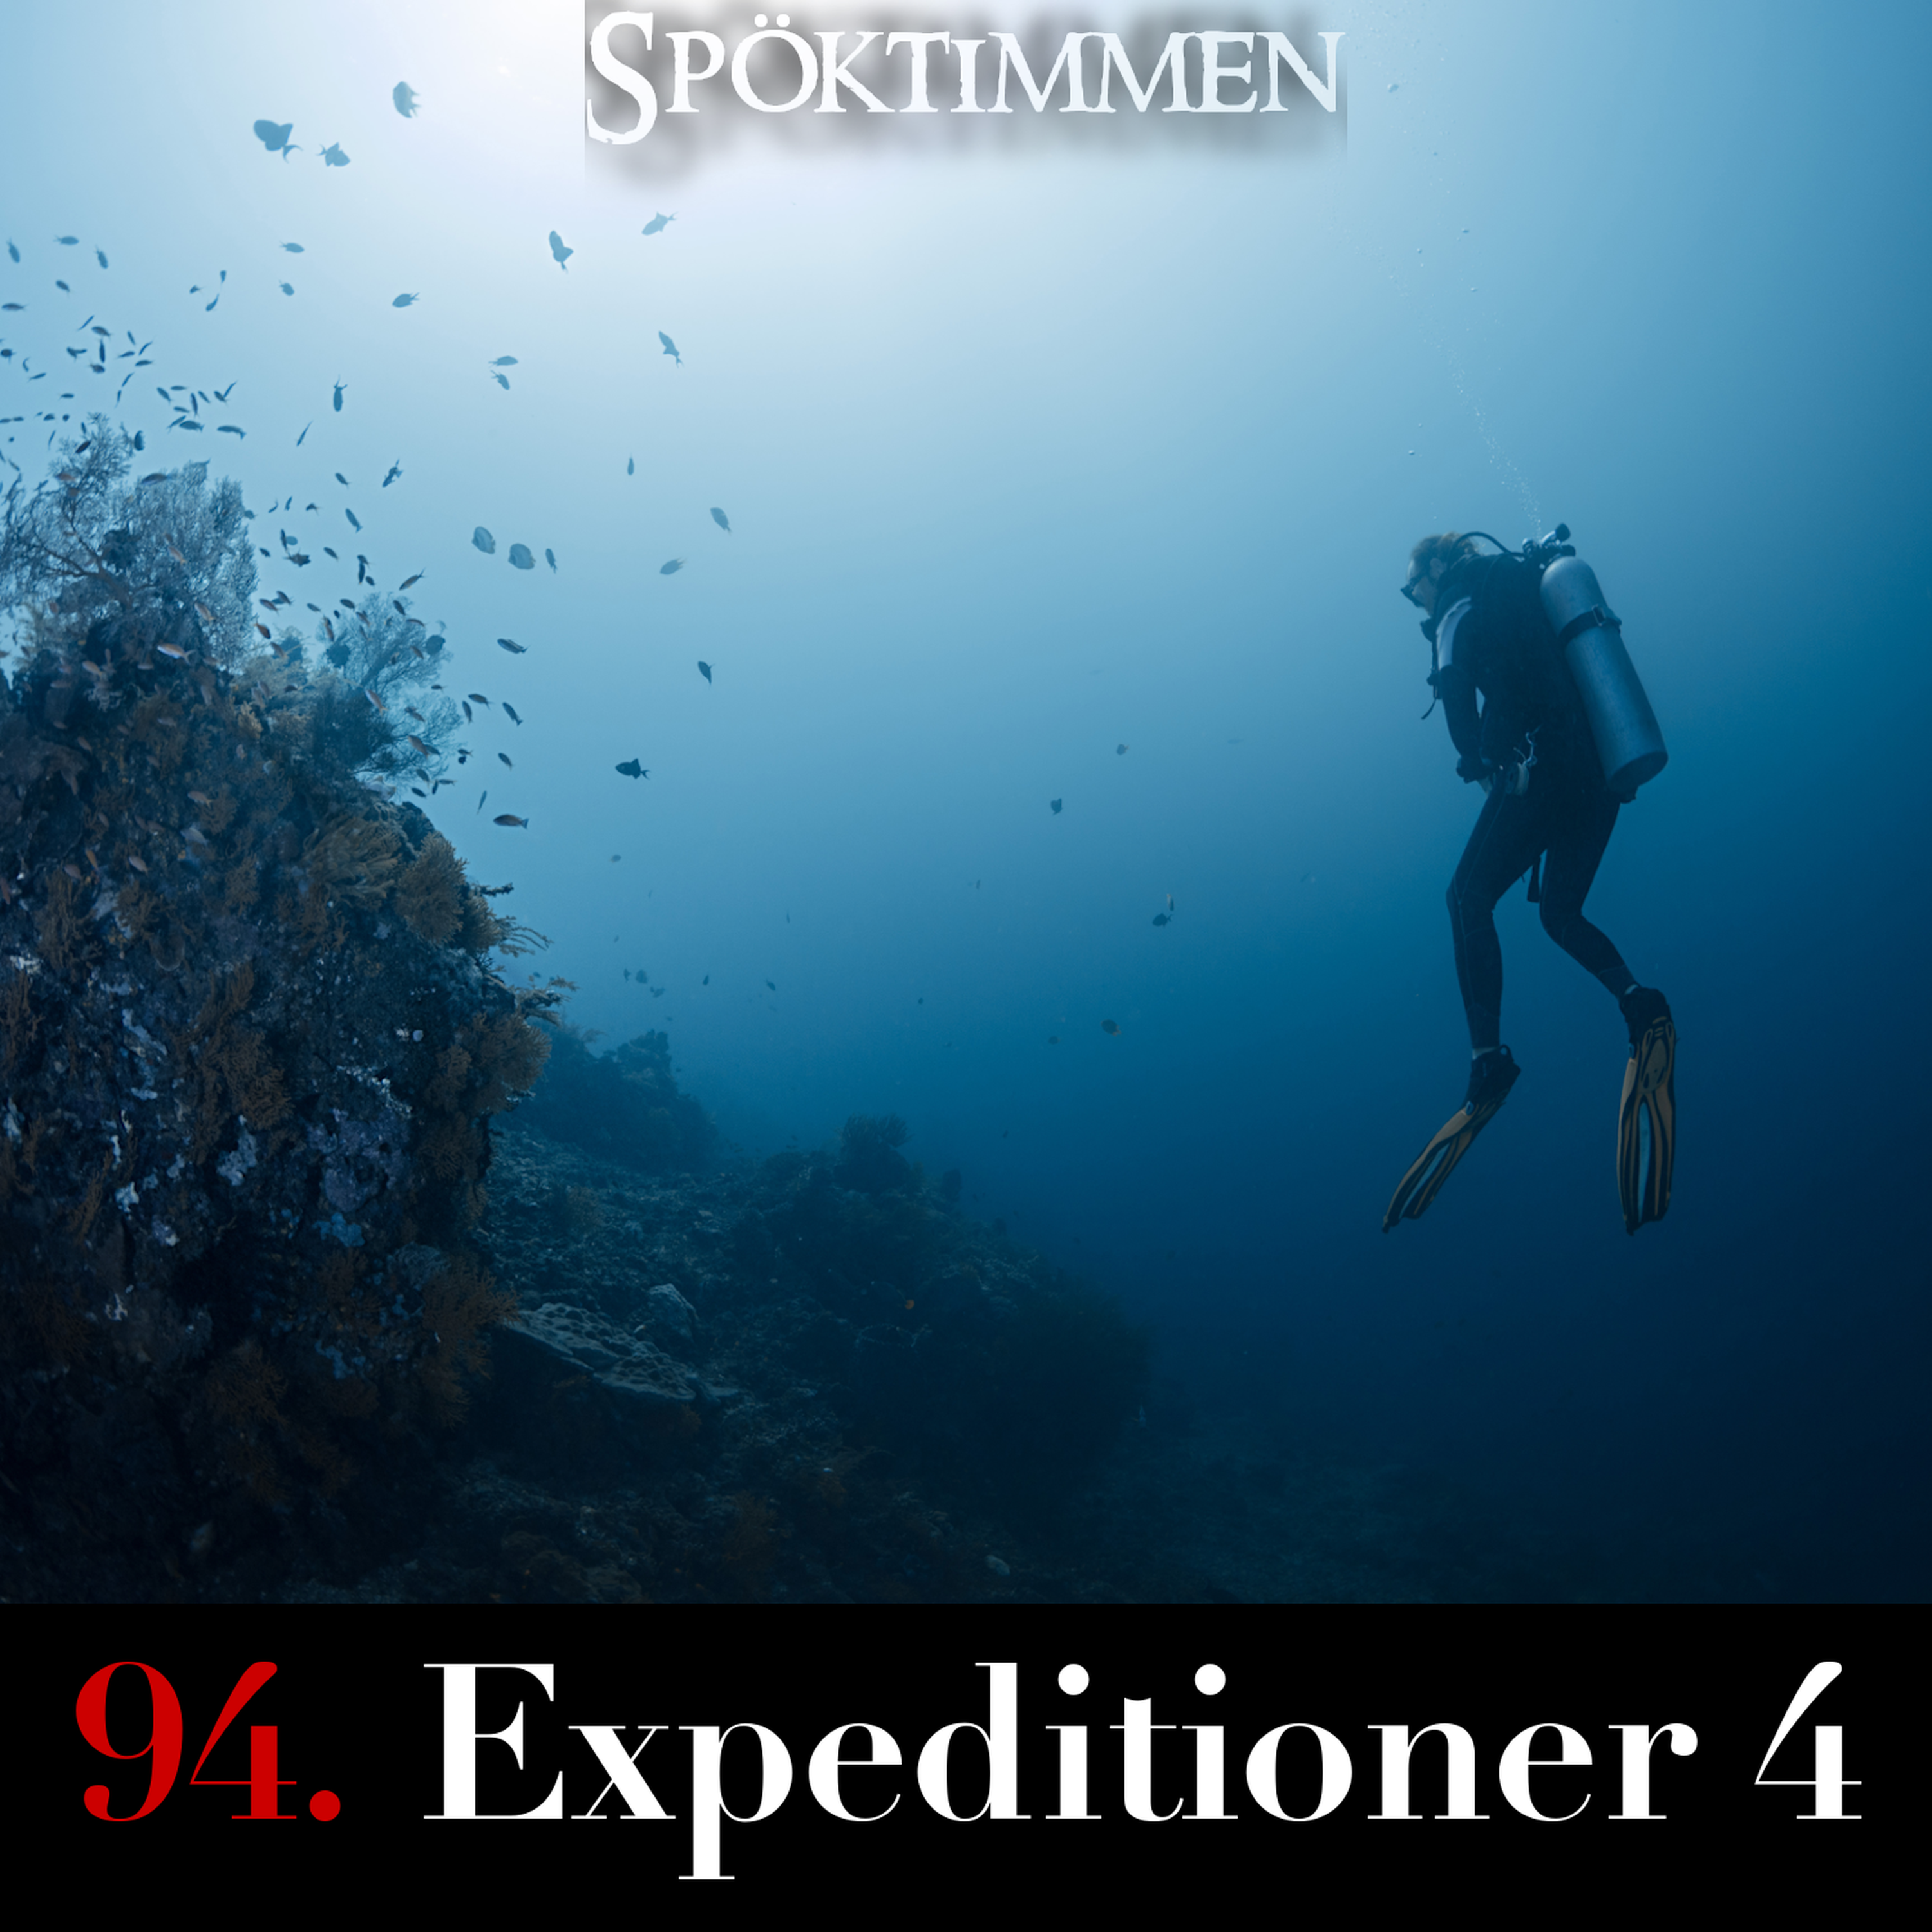 94. Expeditioner 4